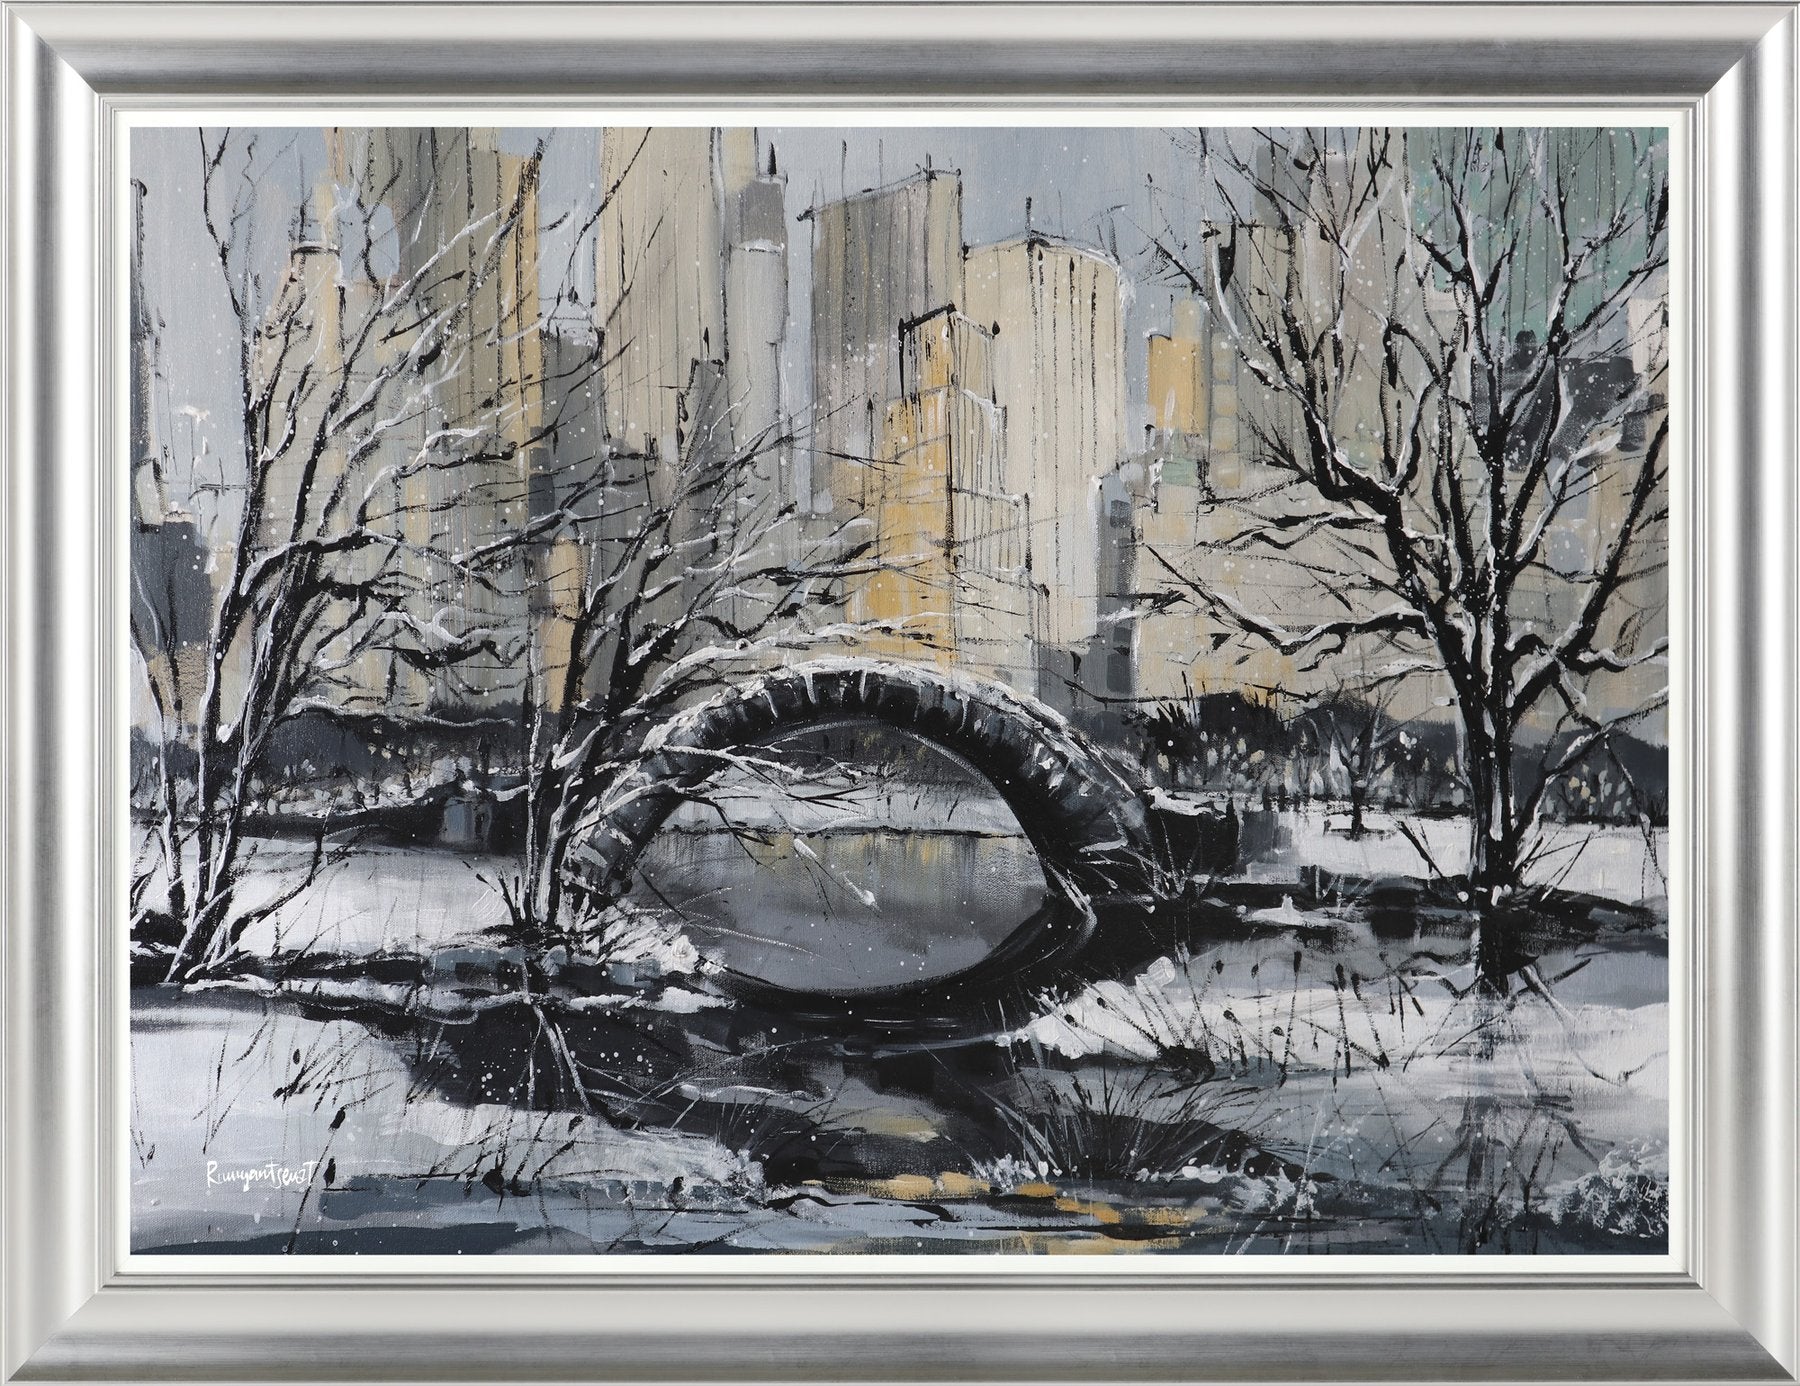 New York Central Park View framed print by Irina Rumyantseva from Artworx Gallery